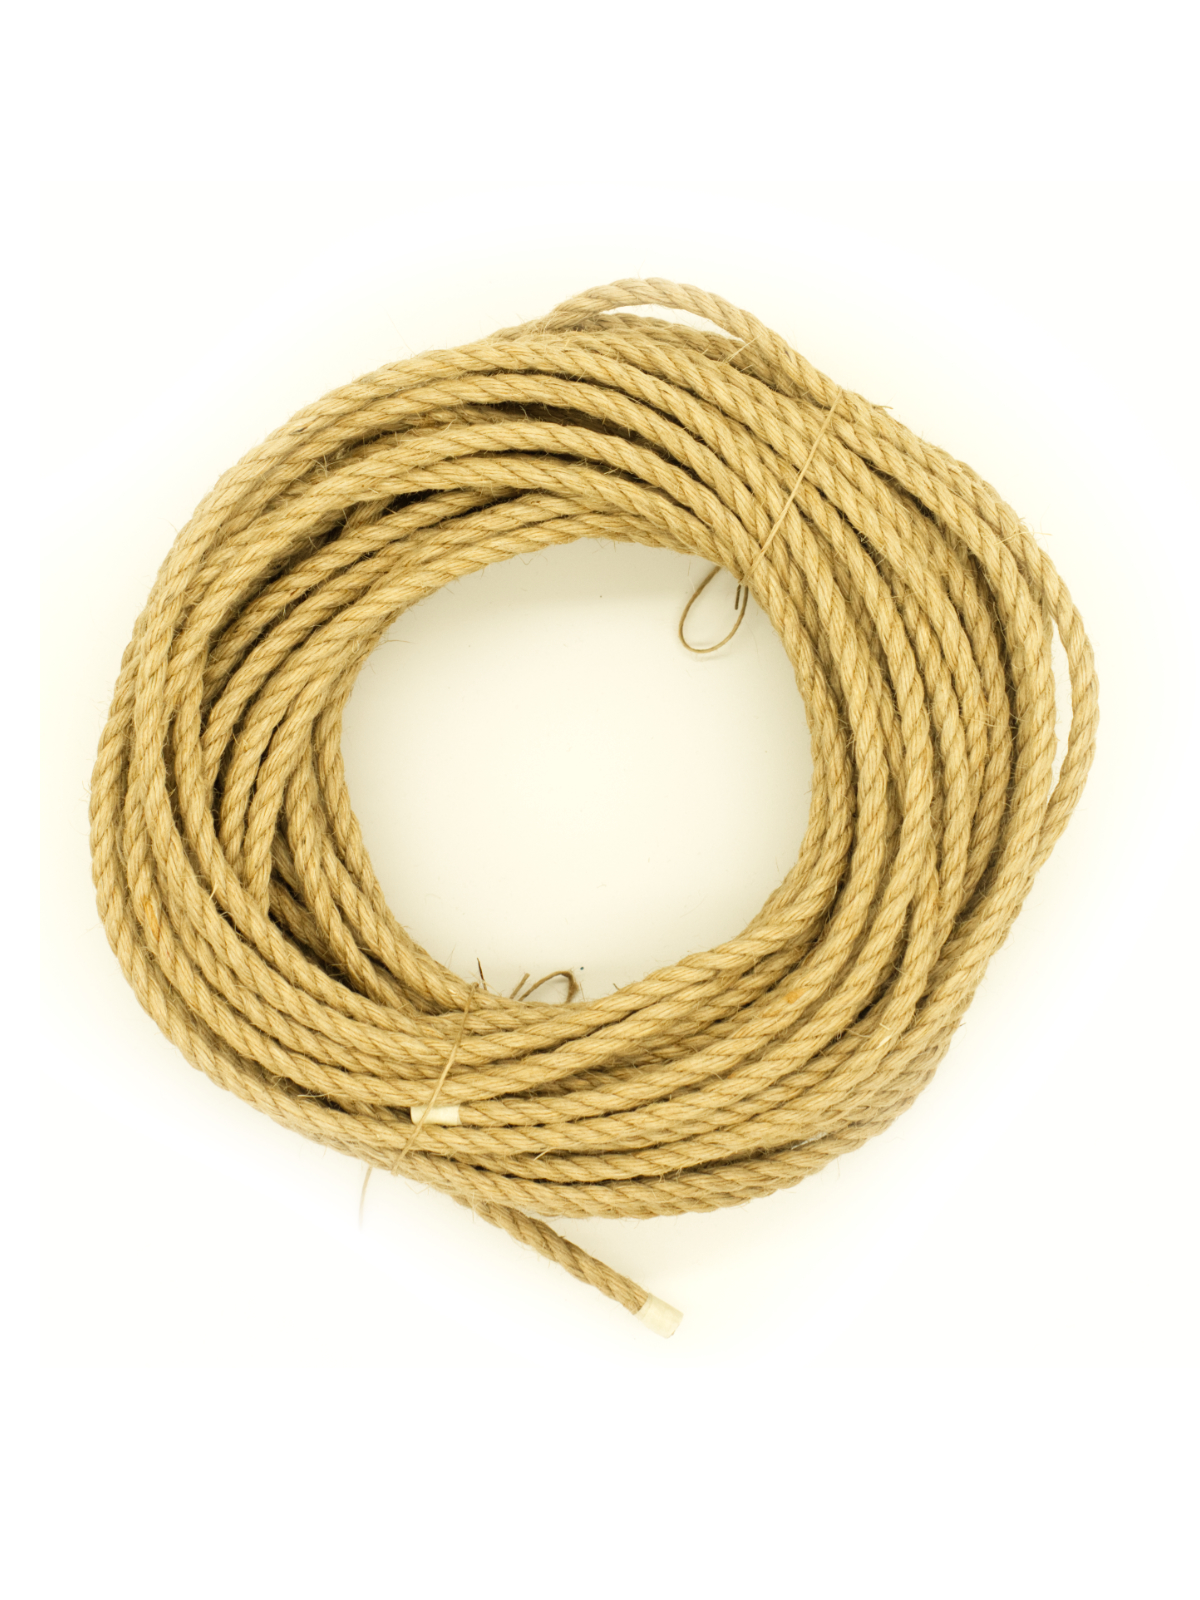 25m ∅ 6mm raw jute rope, AMATSUNAWA 33, JBO-free, for DIY processing